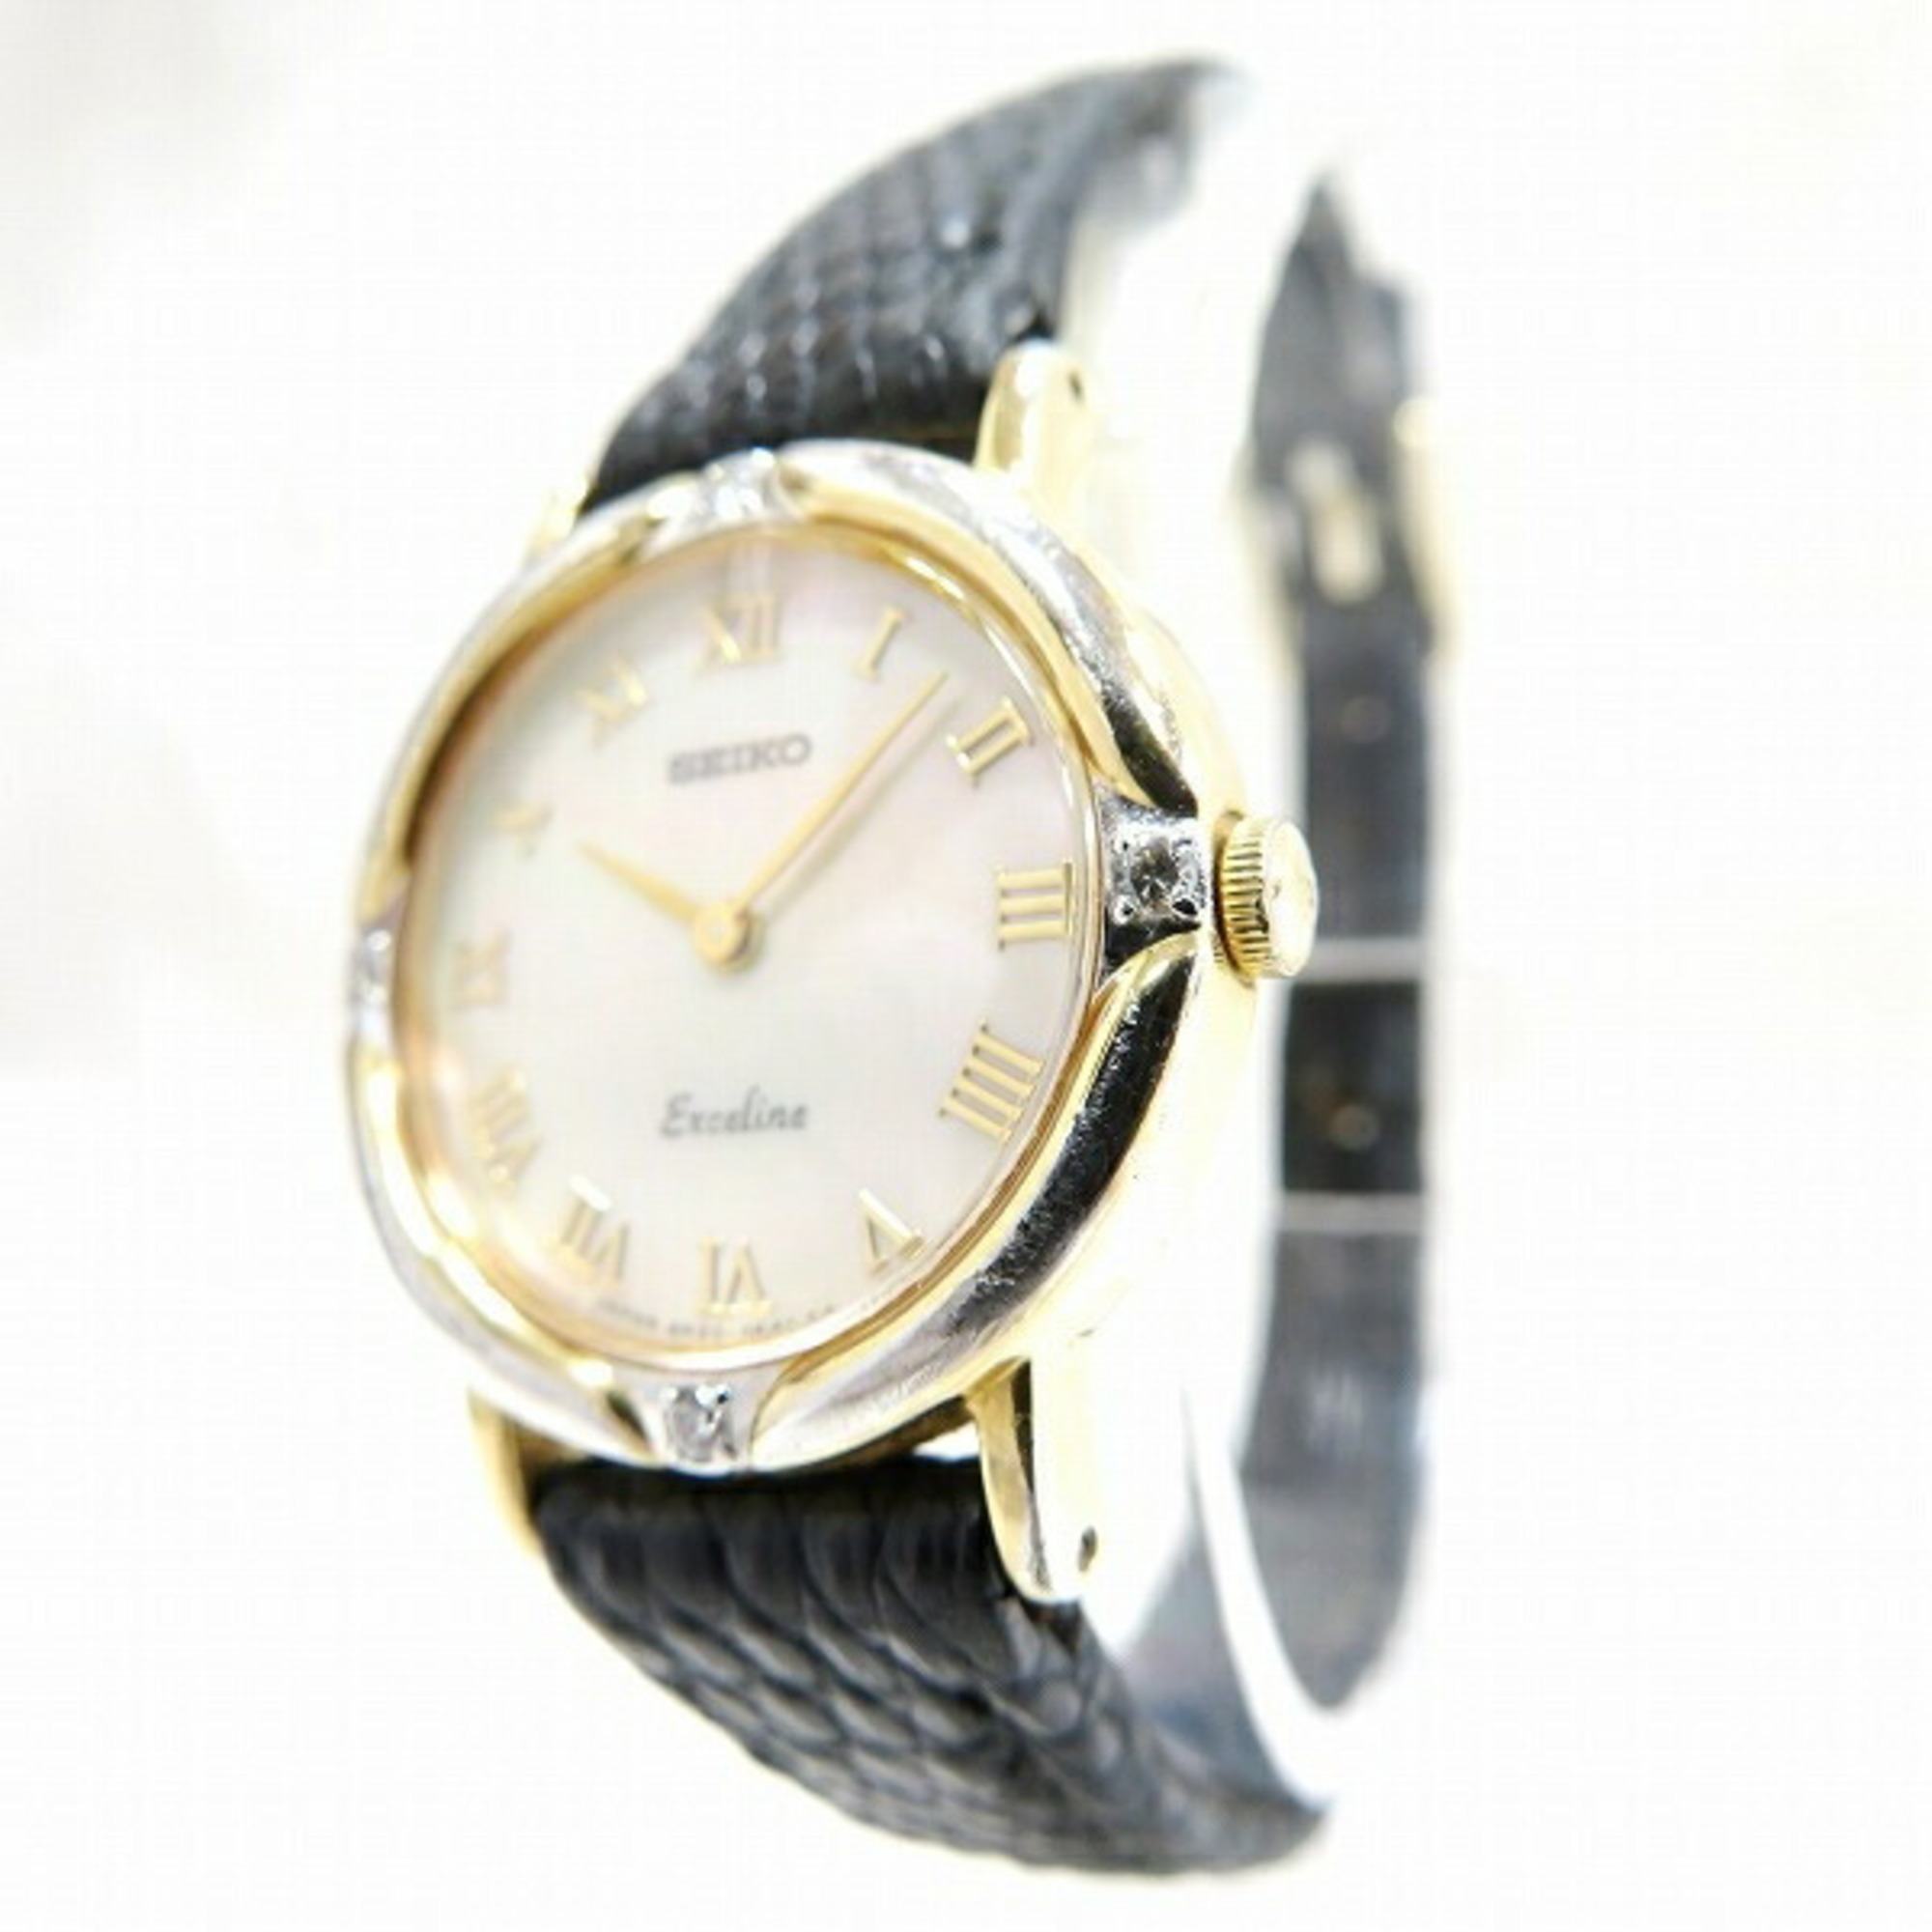 Seiko Excelline 4N20-0370 Quartz Watch Ladies Bezel Diamond